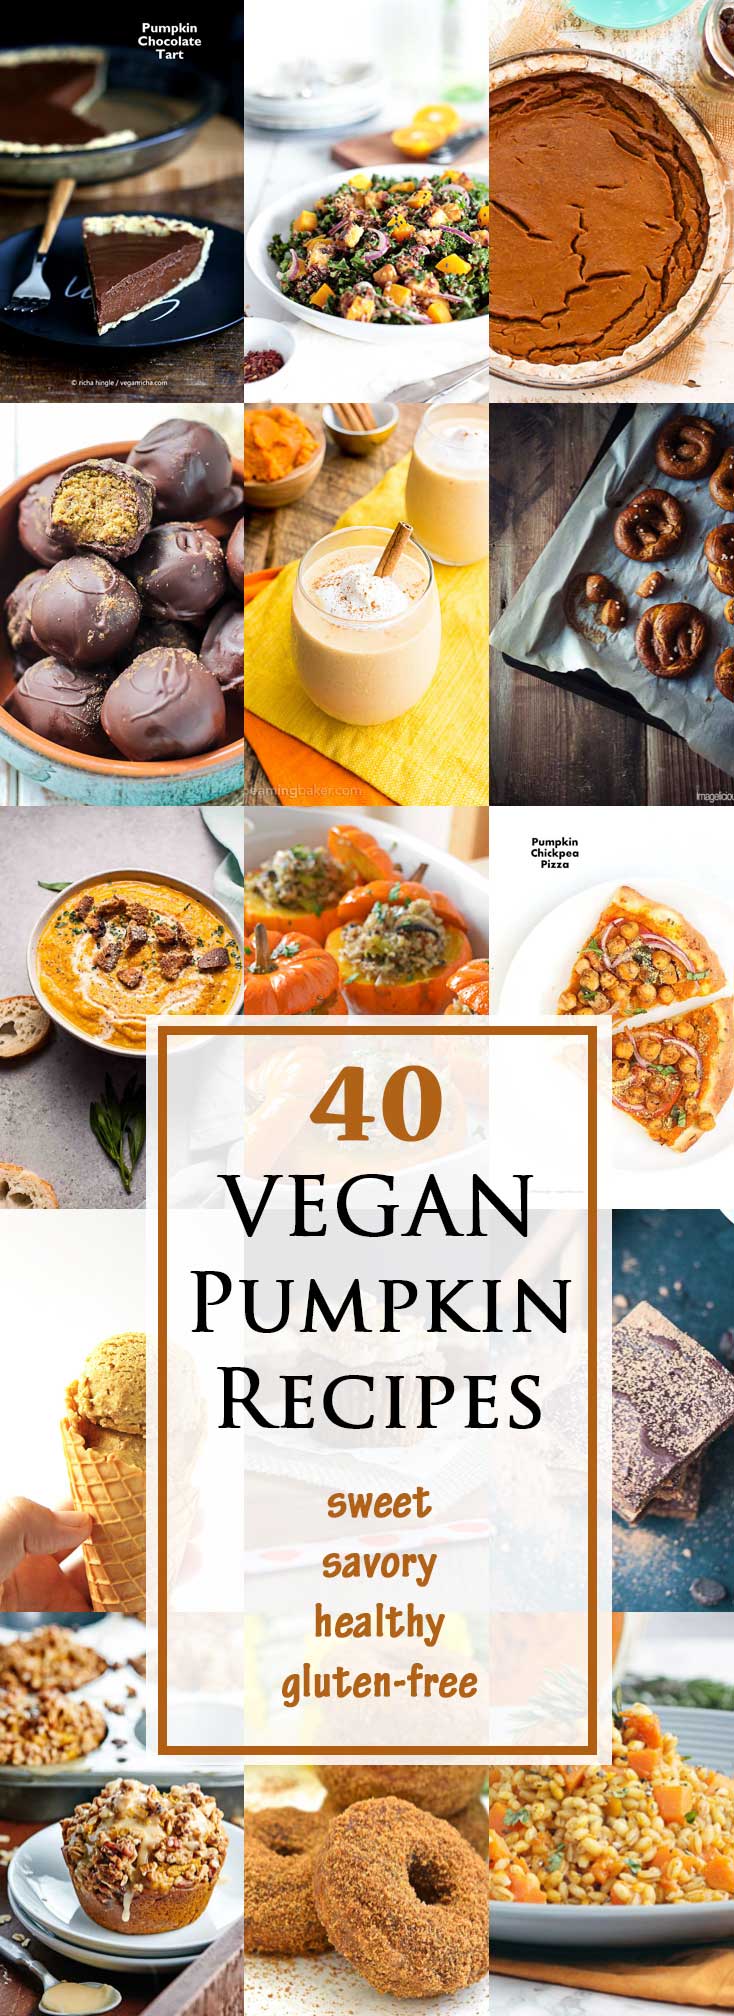 40 Sweet and Savory Vegan Pumpkin Recipes! #healthy #glutenfree #vegan #pumpkin | www.vegetariangastronomy.com